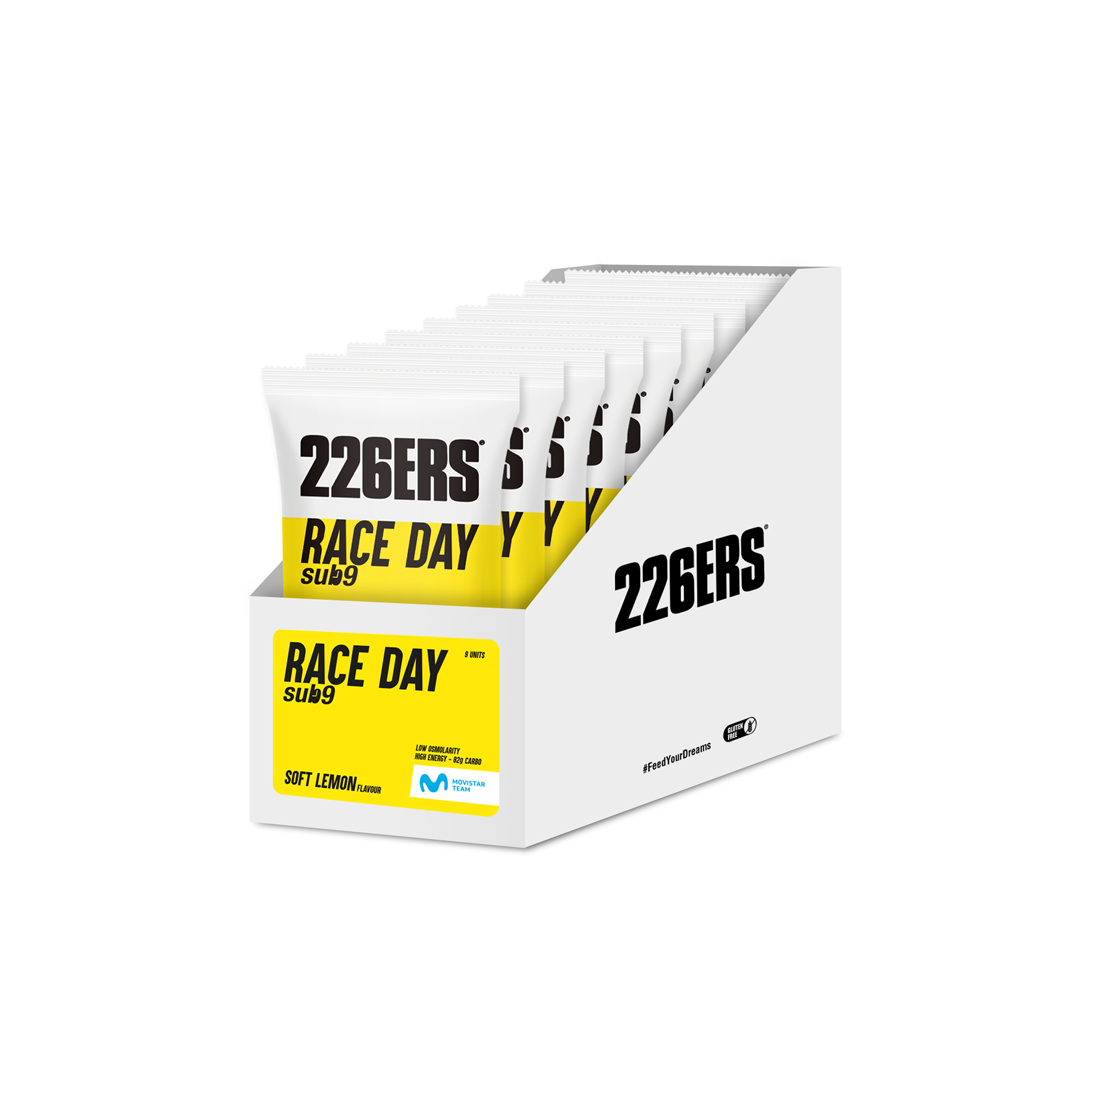 BOX – 9 SUB9 RACE DAY